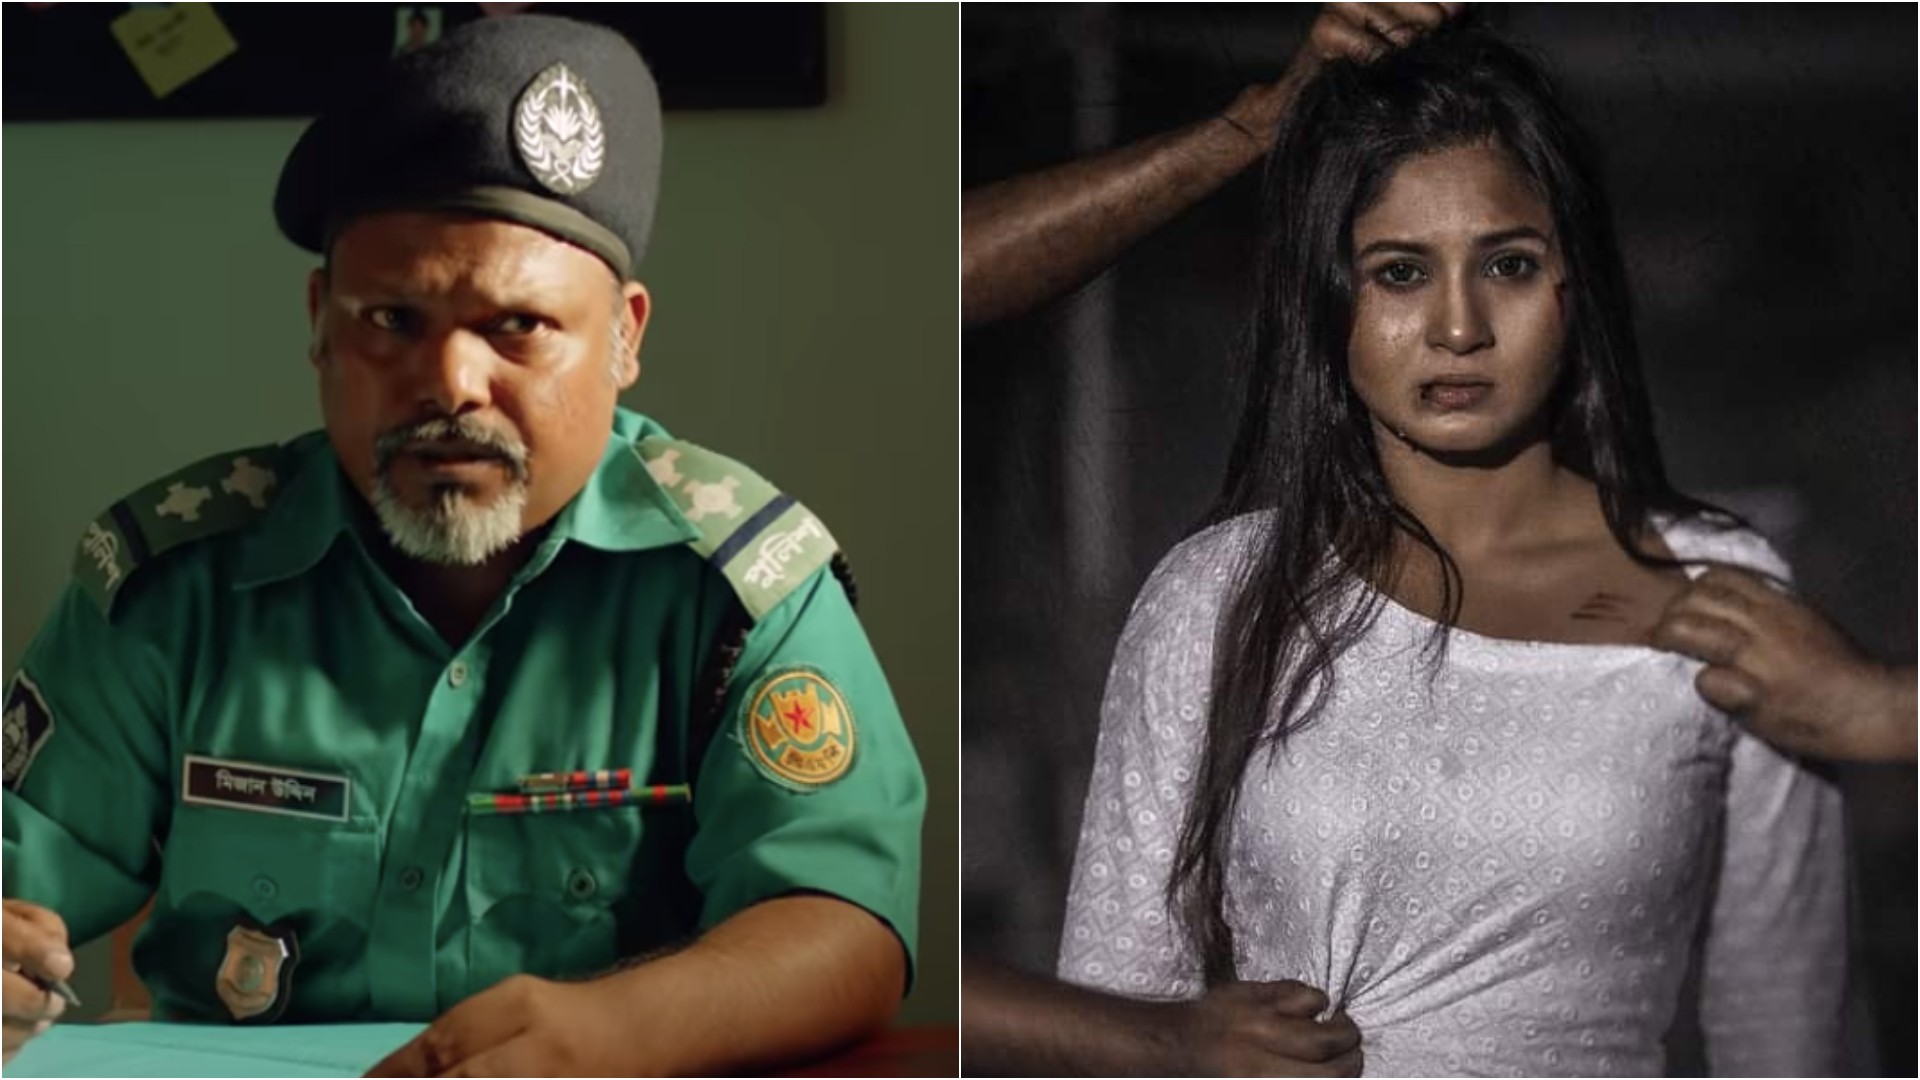 Bangladesh Police Sex Video - Bangladeshi Director Made a Film on Gender Violence. The Cops Arrested Him